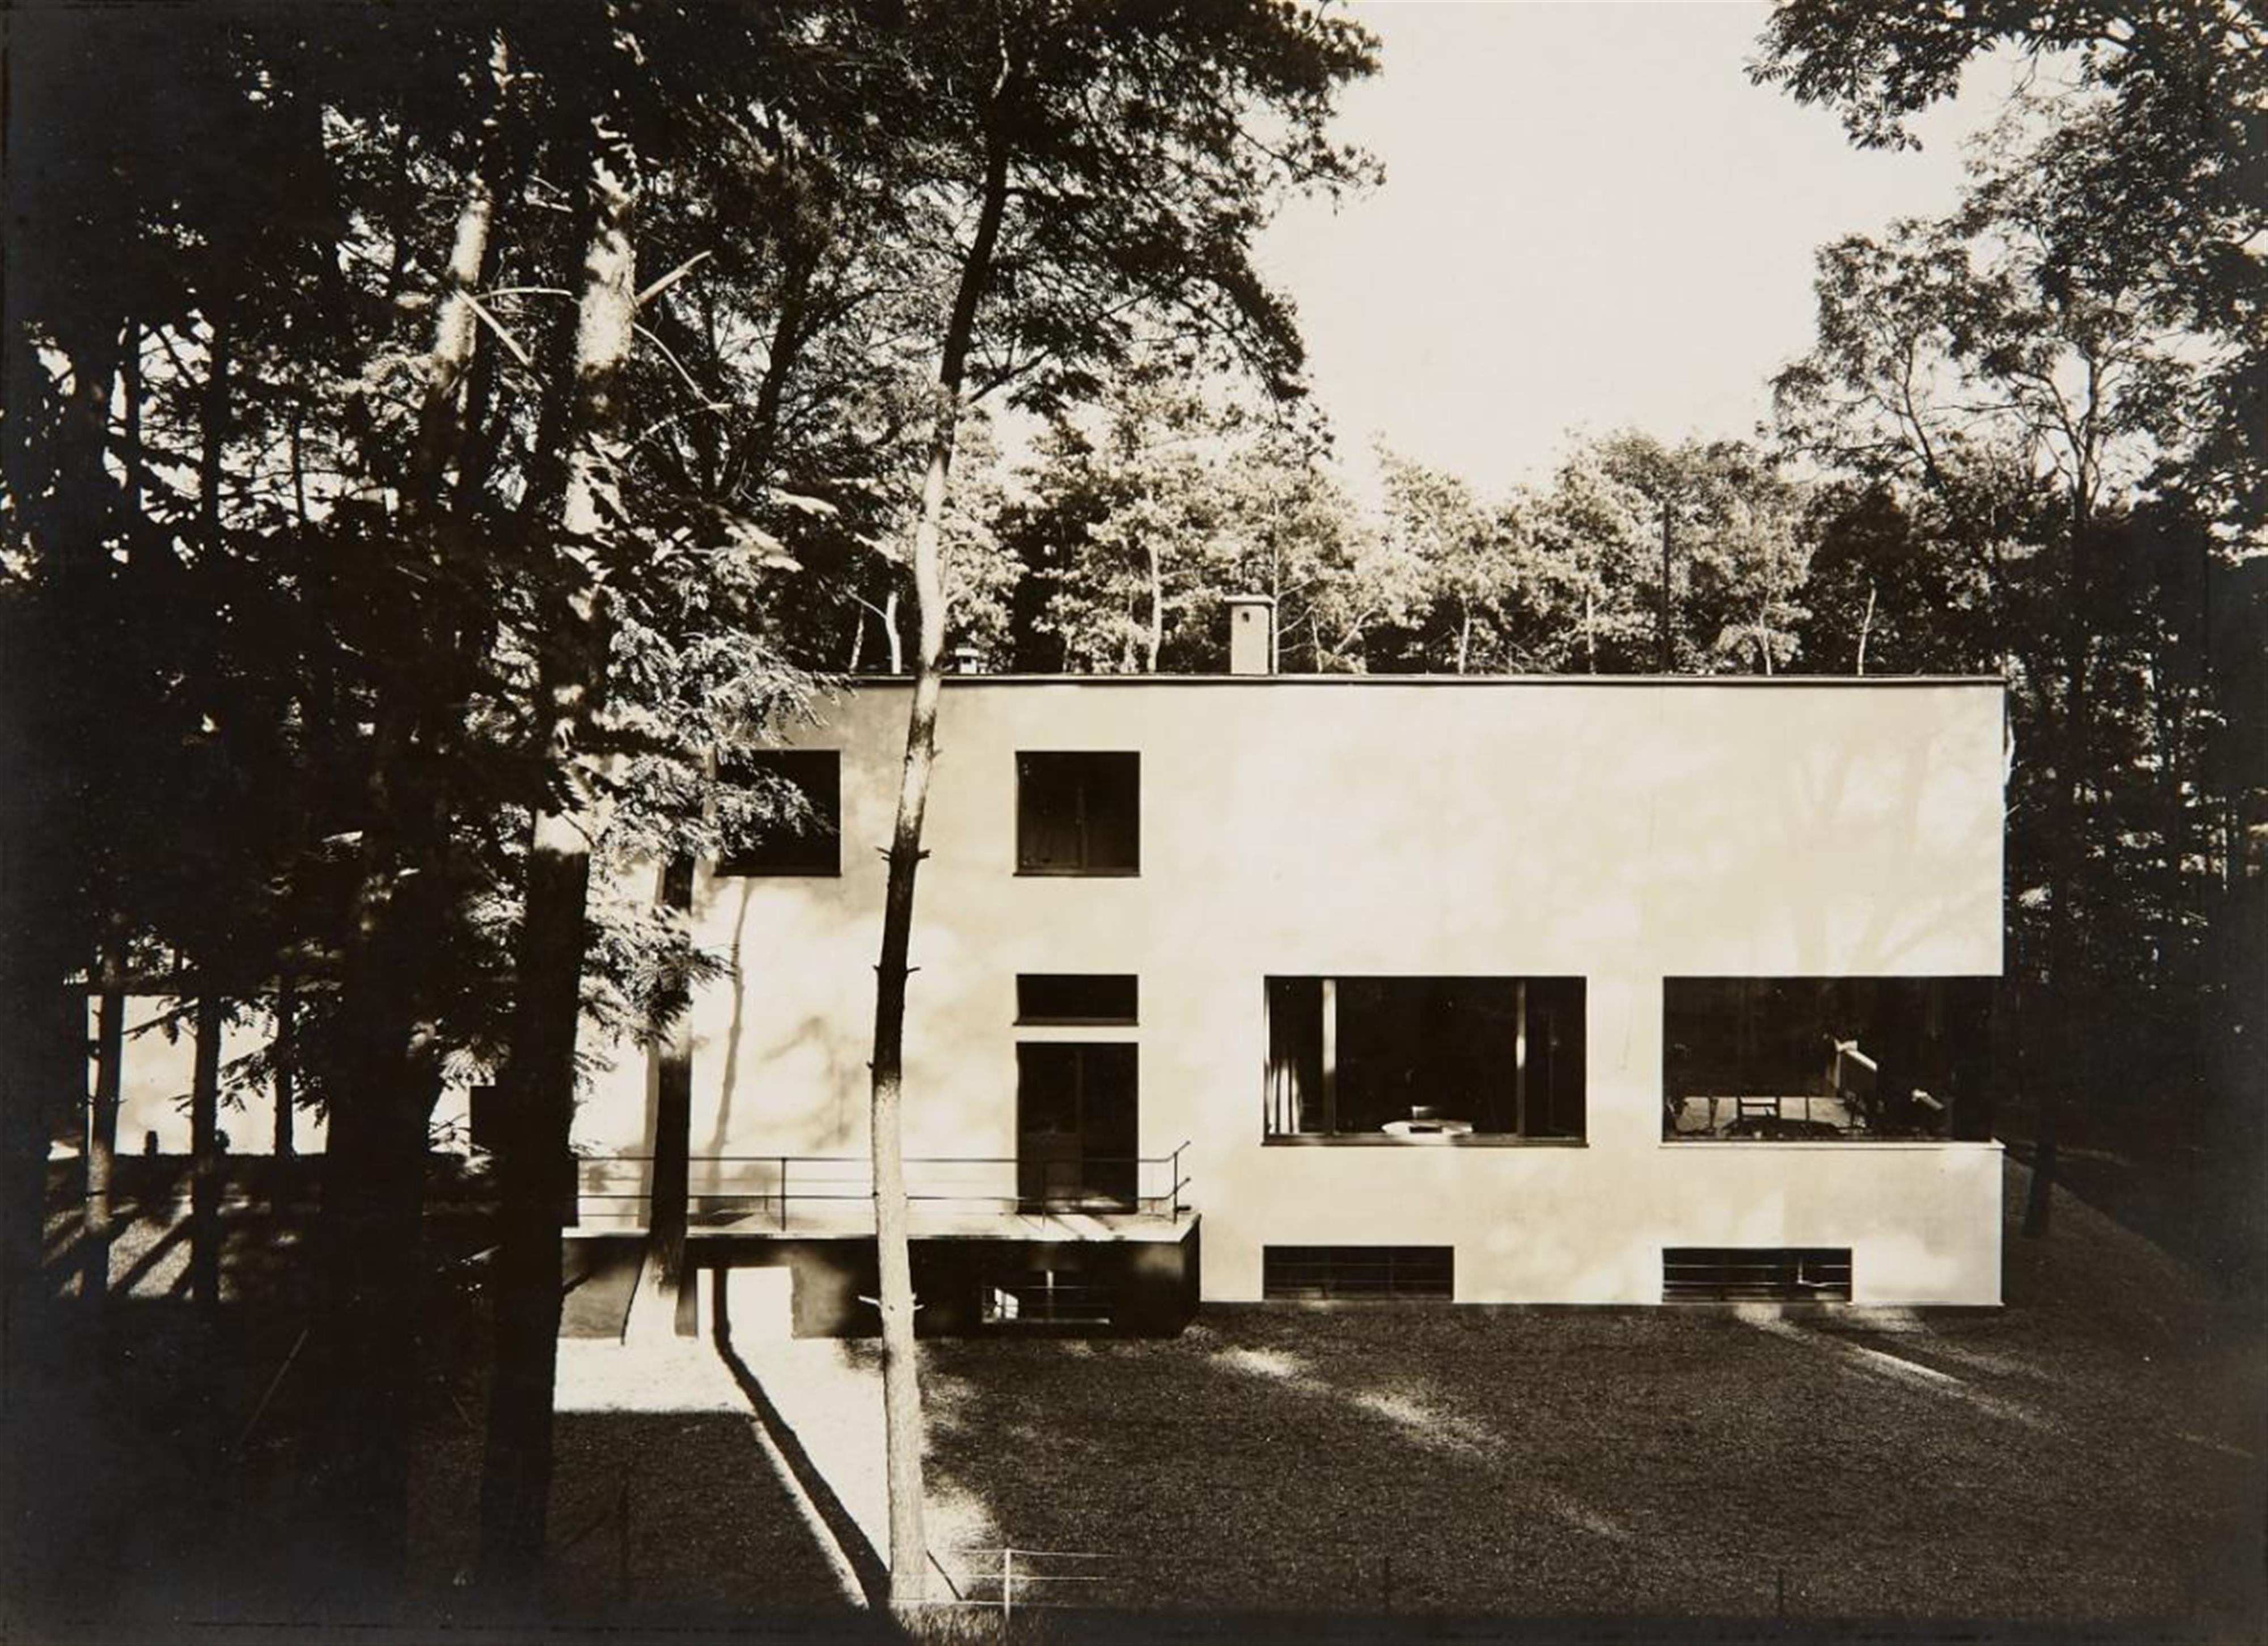 Lucia Moholy - Bauhaussiedlung Dessau, Haus Gropius (Residential area, Bauhaus Dessau, Gropius House) - image-1